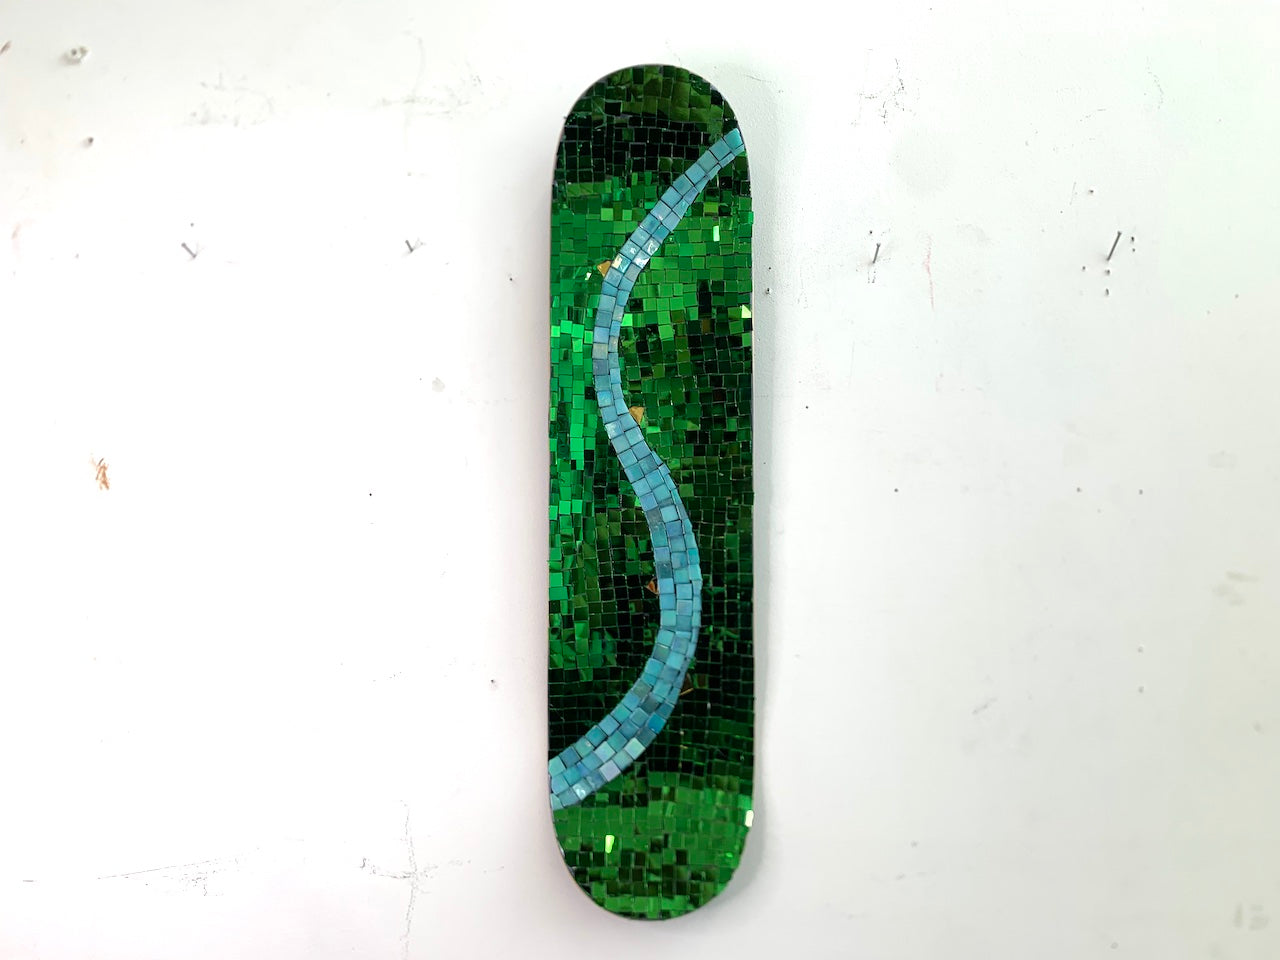 Thai mirror glass  skateboard depicting spring  Edit alt text